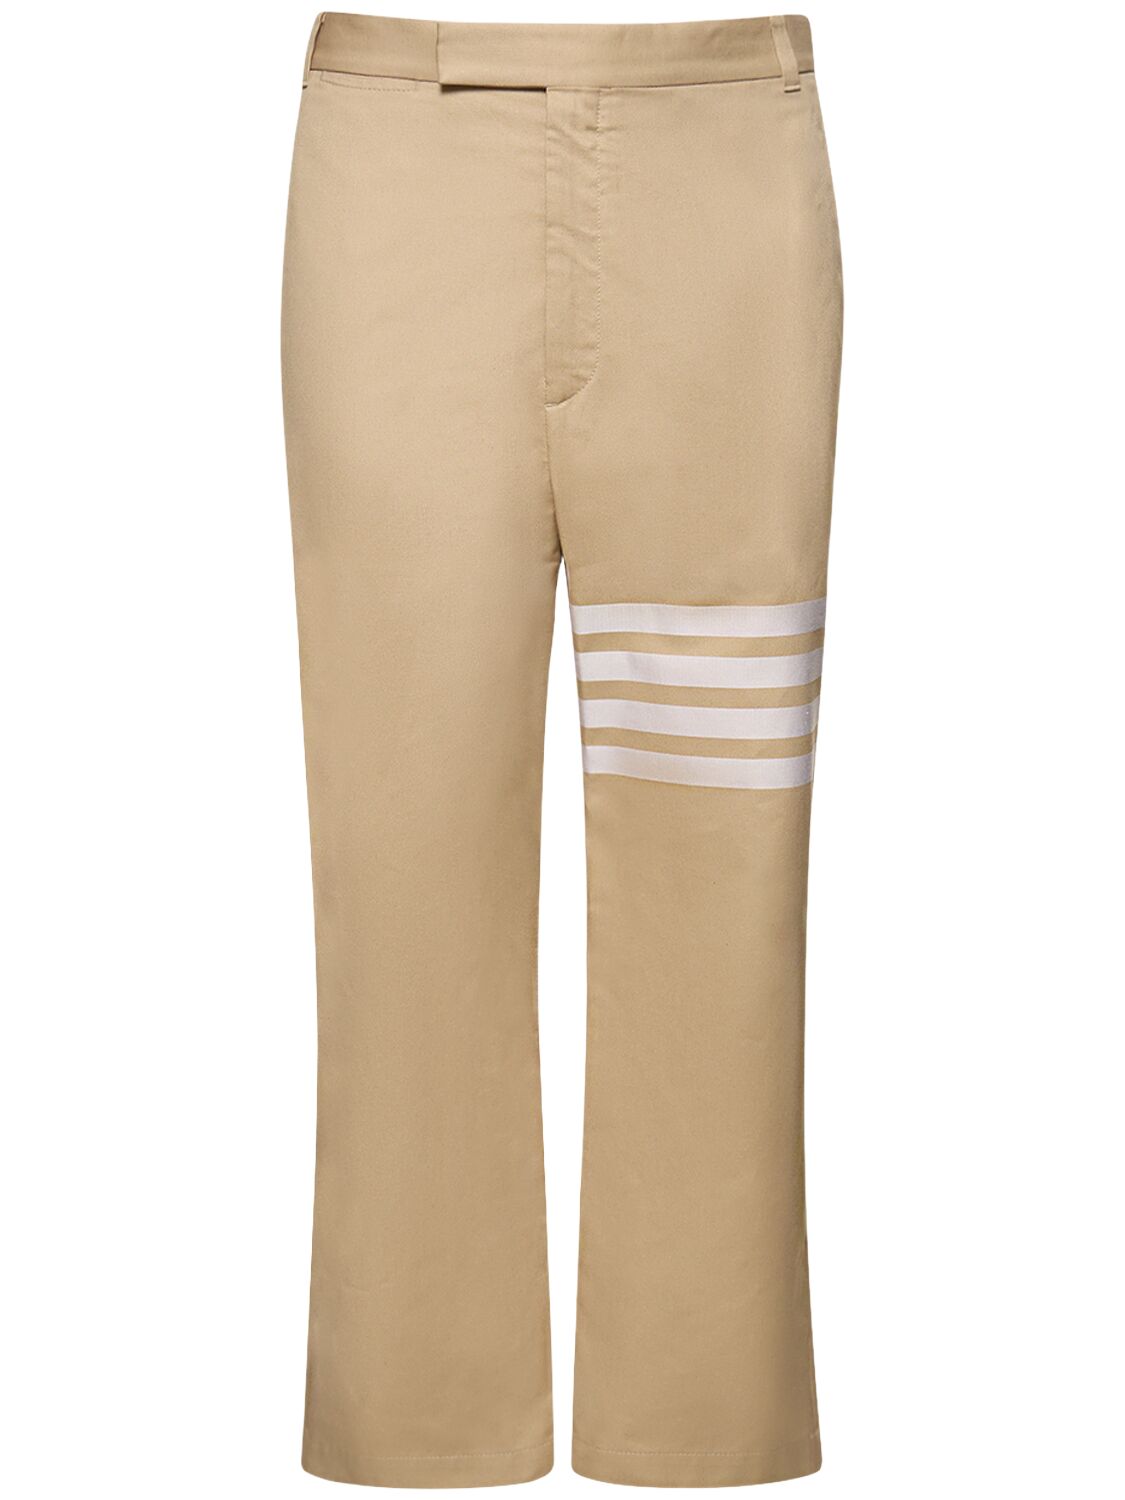 Unconstructed Straight Leg Cotton Pants